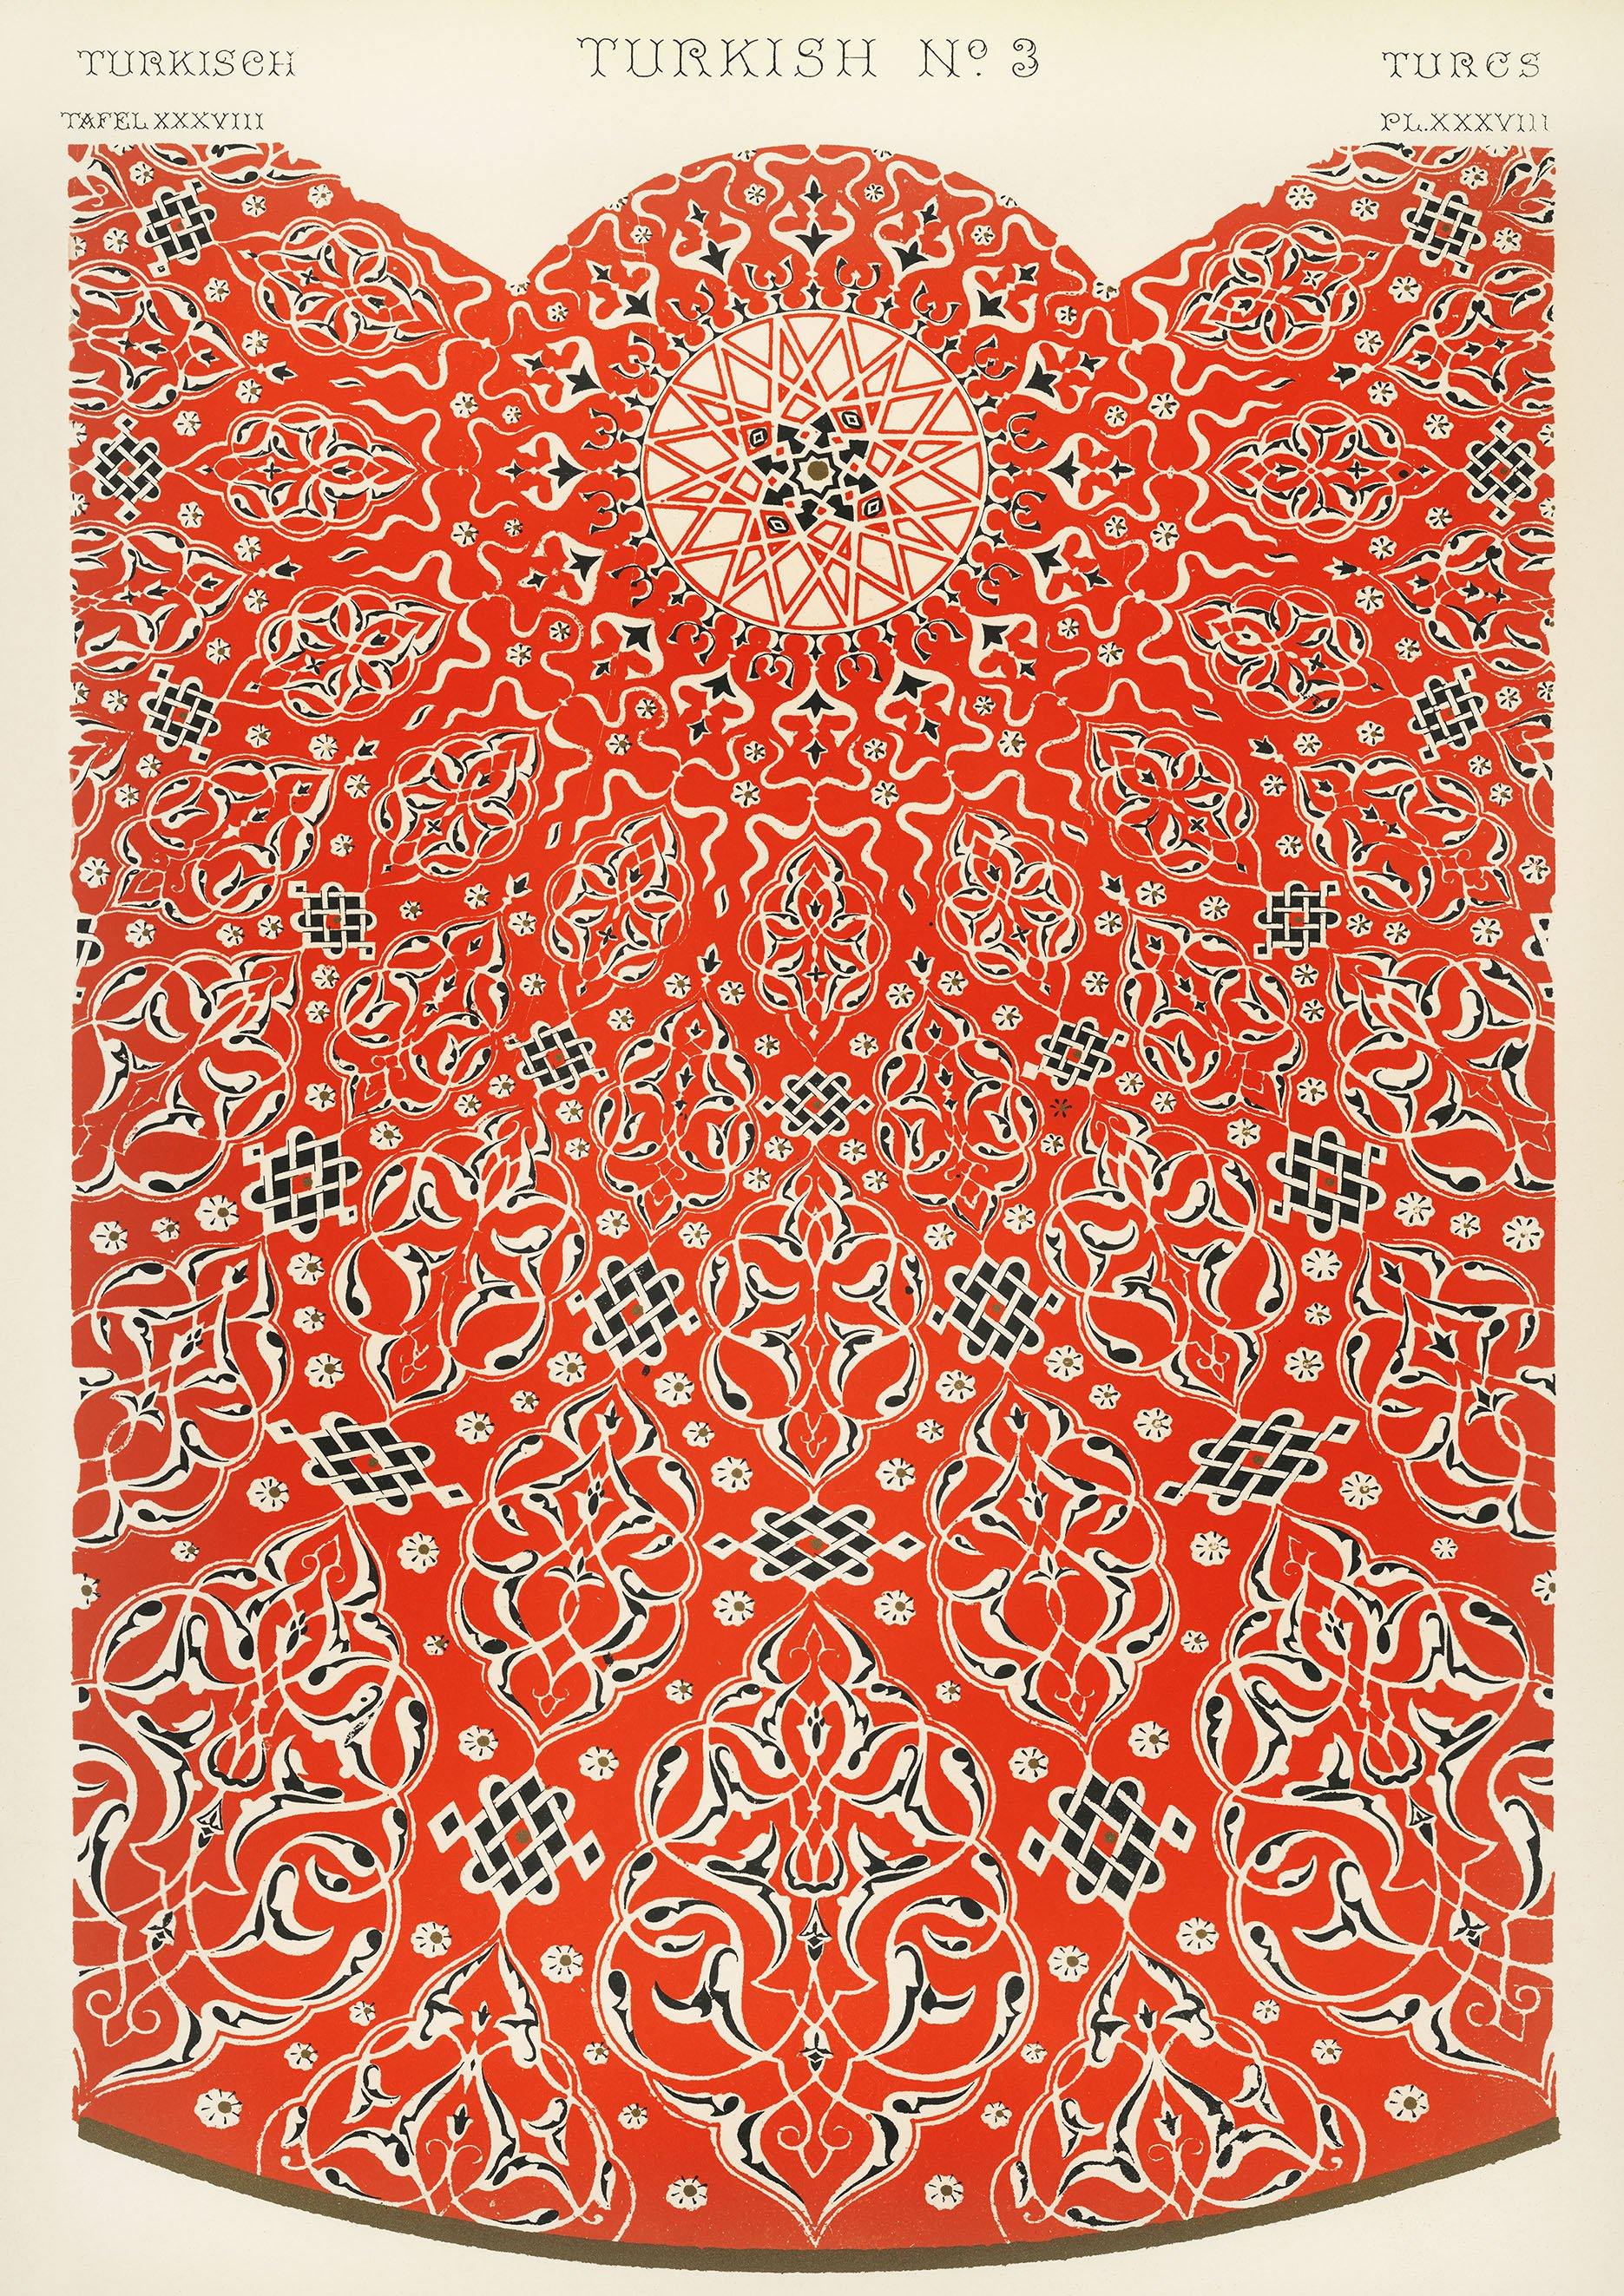 TURKISH DESIGN PRINTS: Vintage Graphic Design Art, by Owen Jones - Pimlico Prints